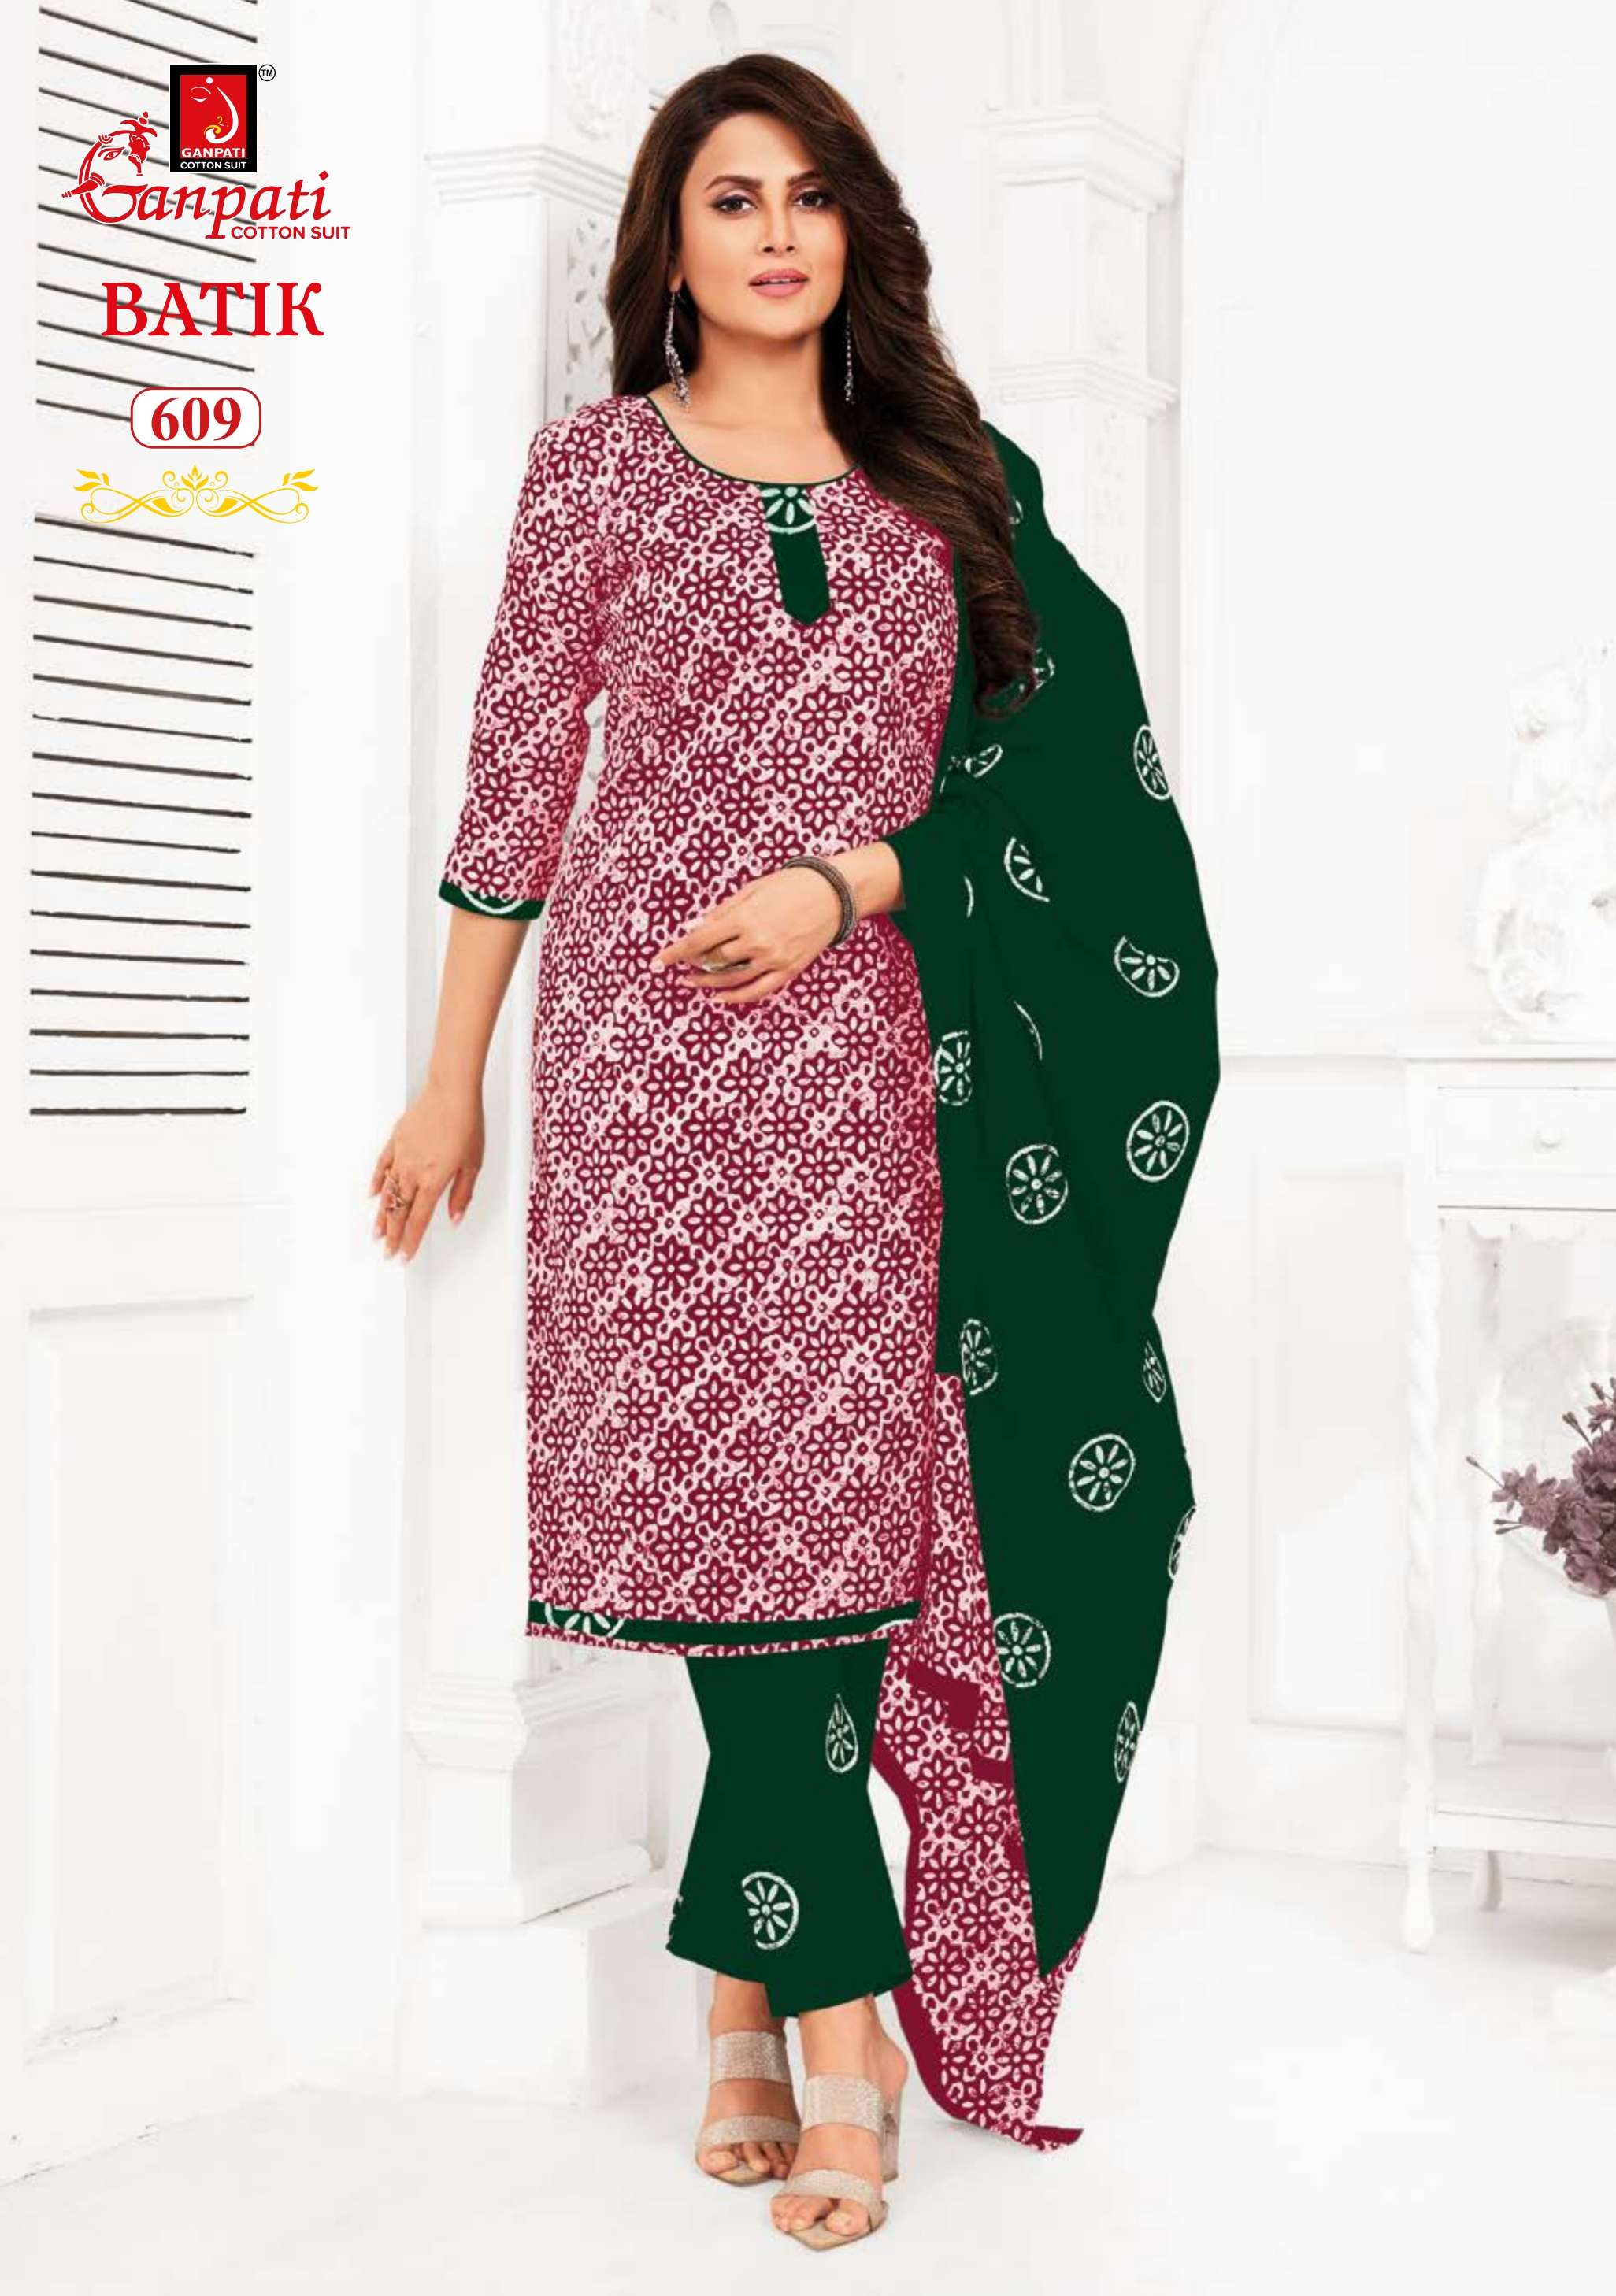 ganpati cotton suits batik vol-6 601-615 series designer cotton salwar kameez wholesaler surat gujarat